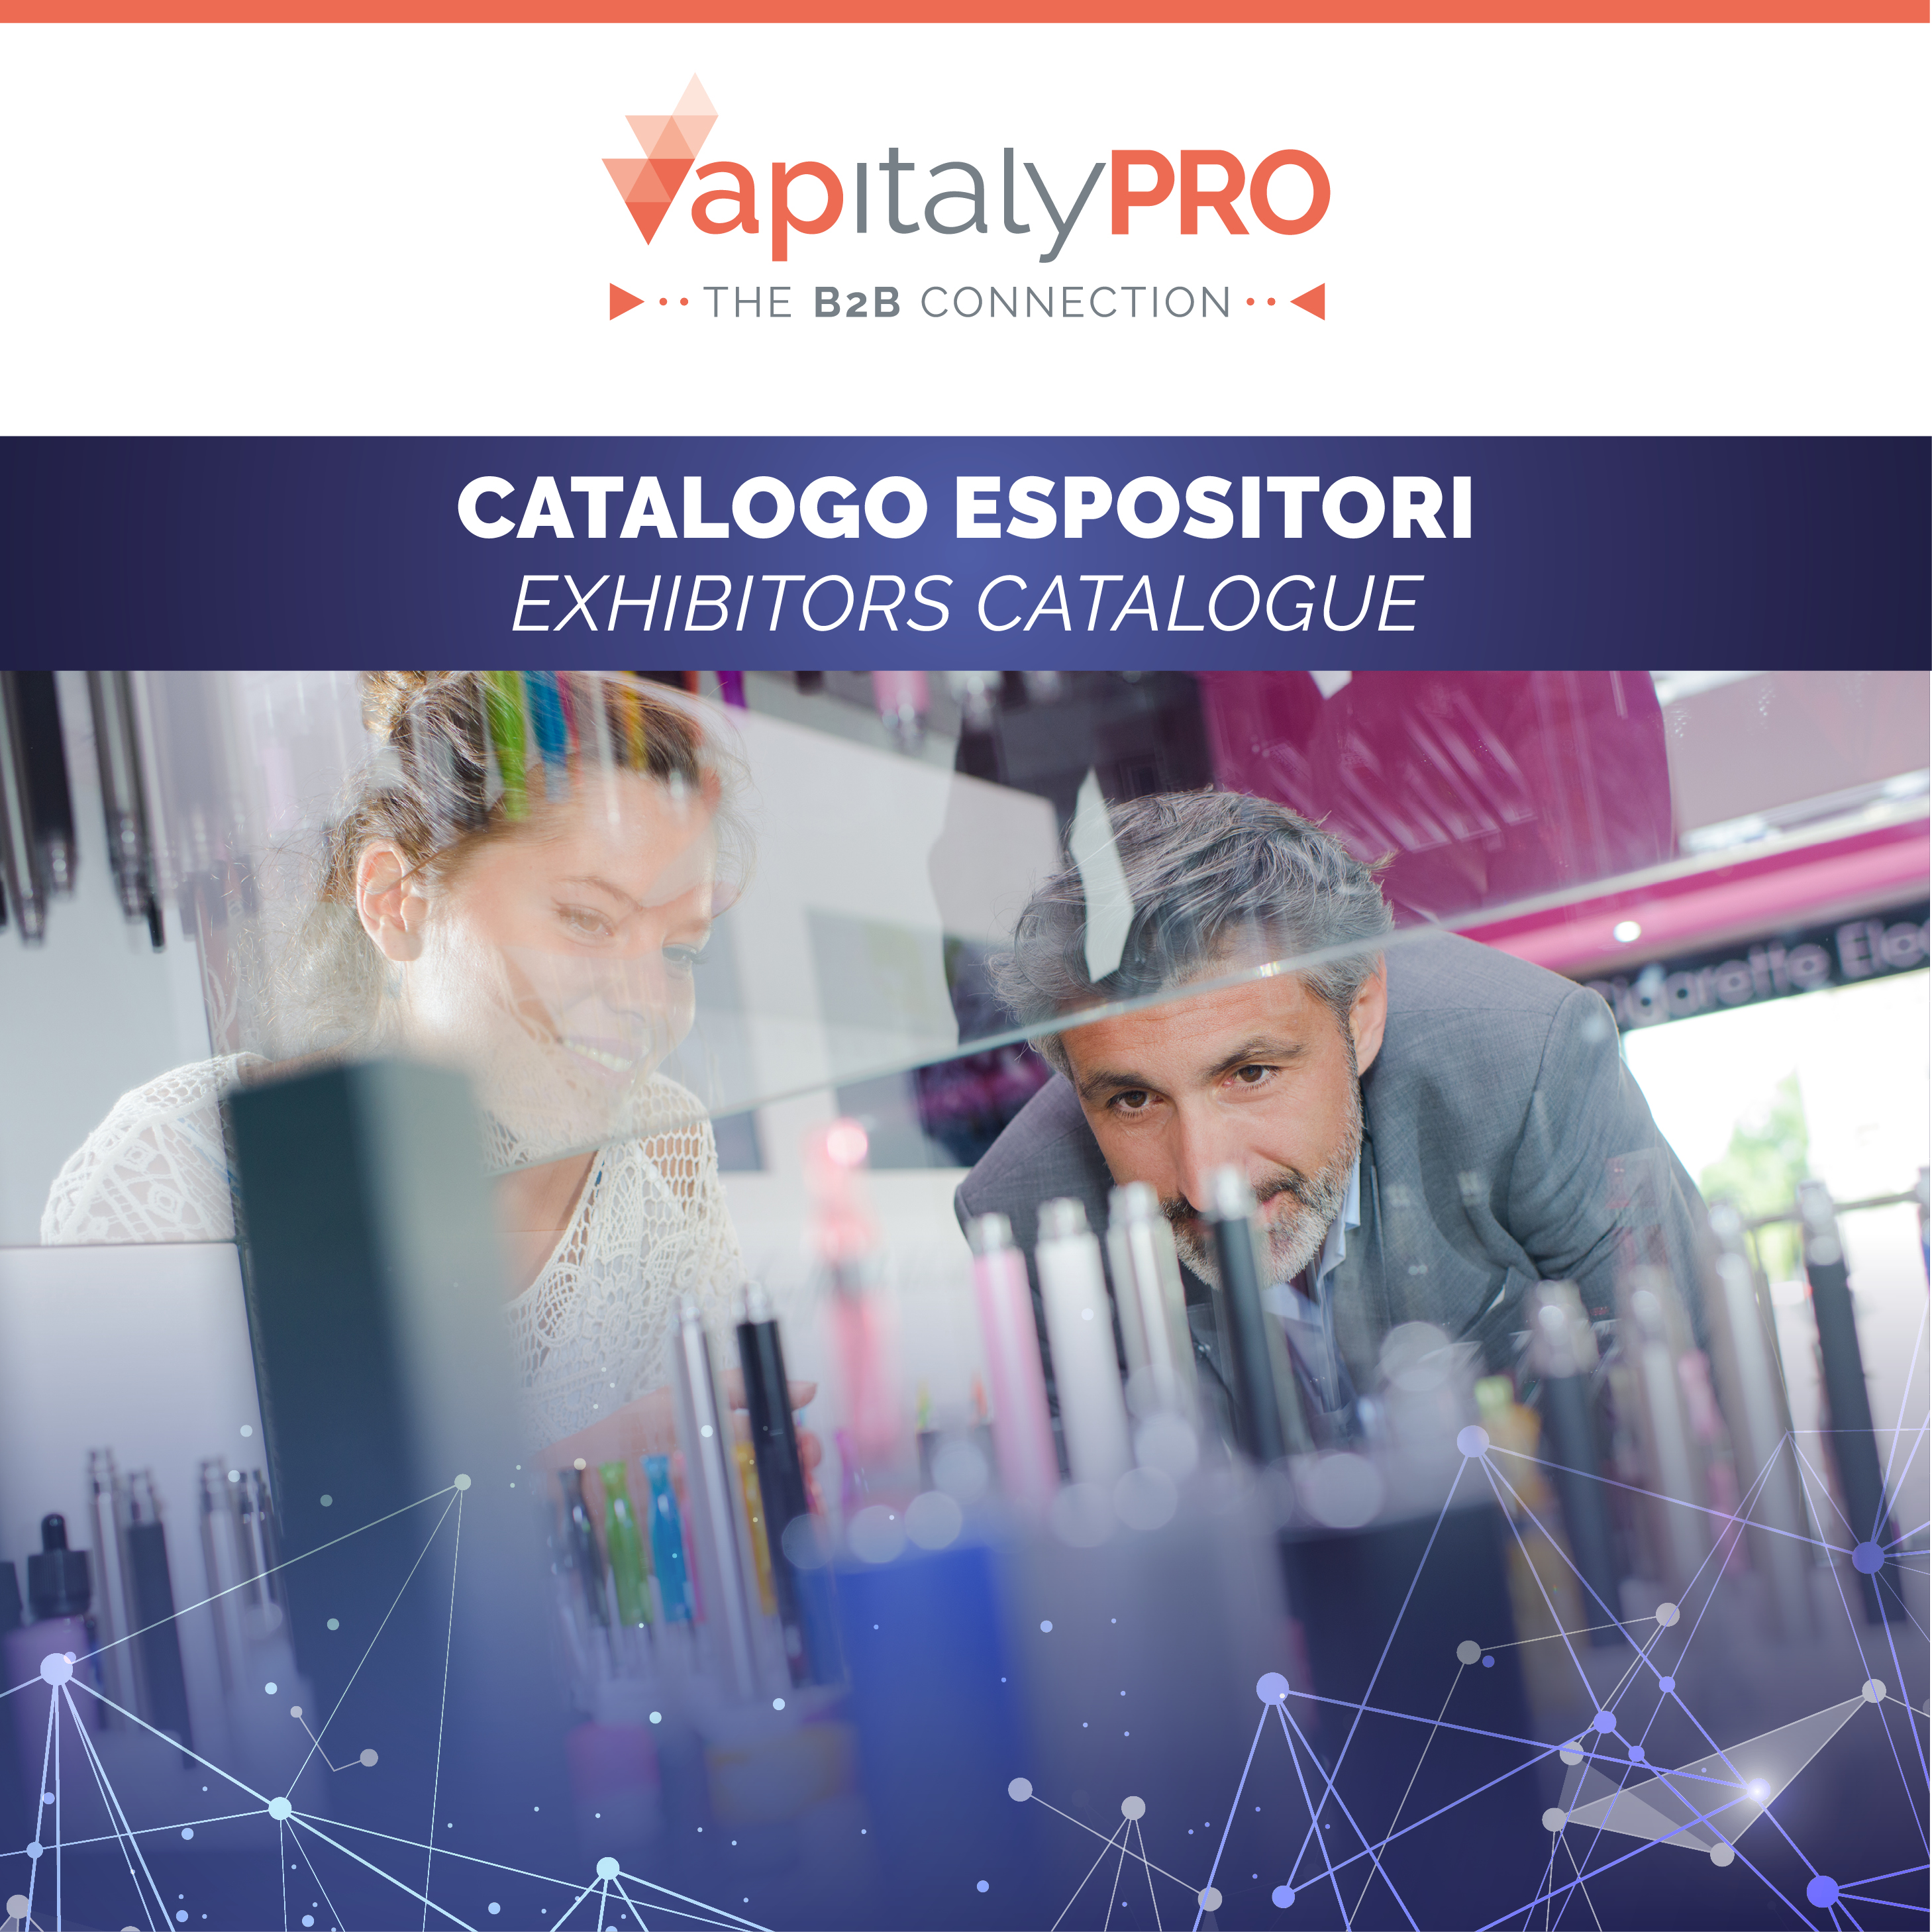 VapitalyPRO 2019: È online il catalogo espositori